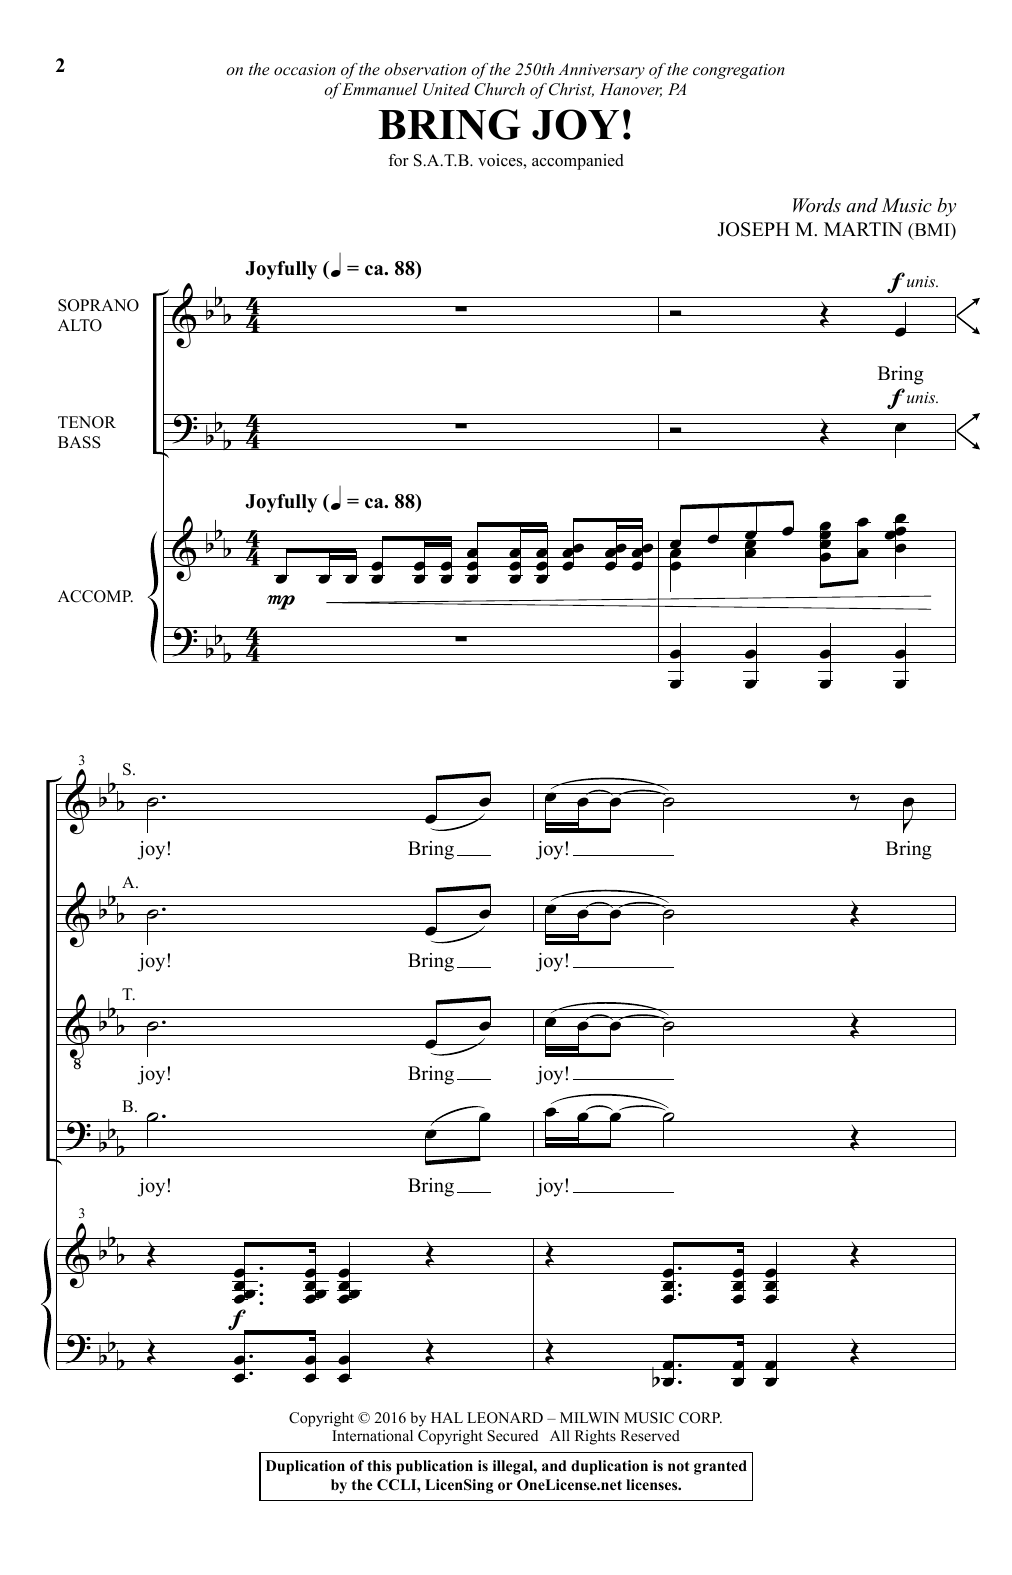 Joseph M. Martin Bring Joy! sheet music notes and chords arranged for SATB Choir